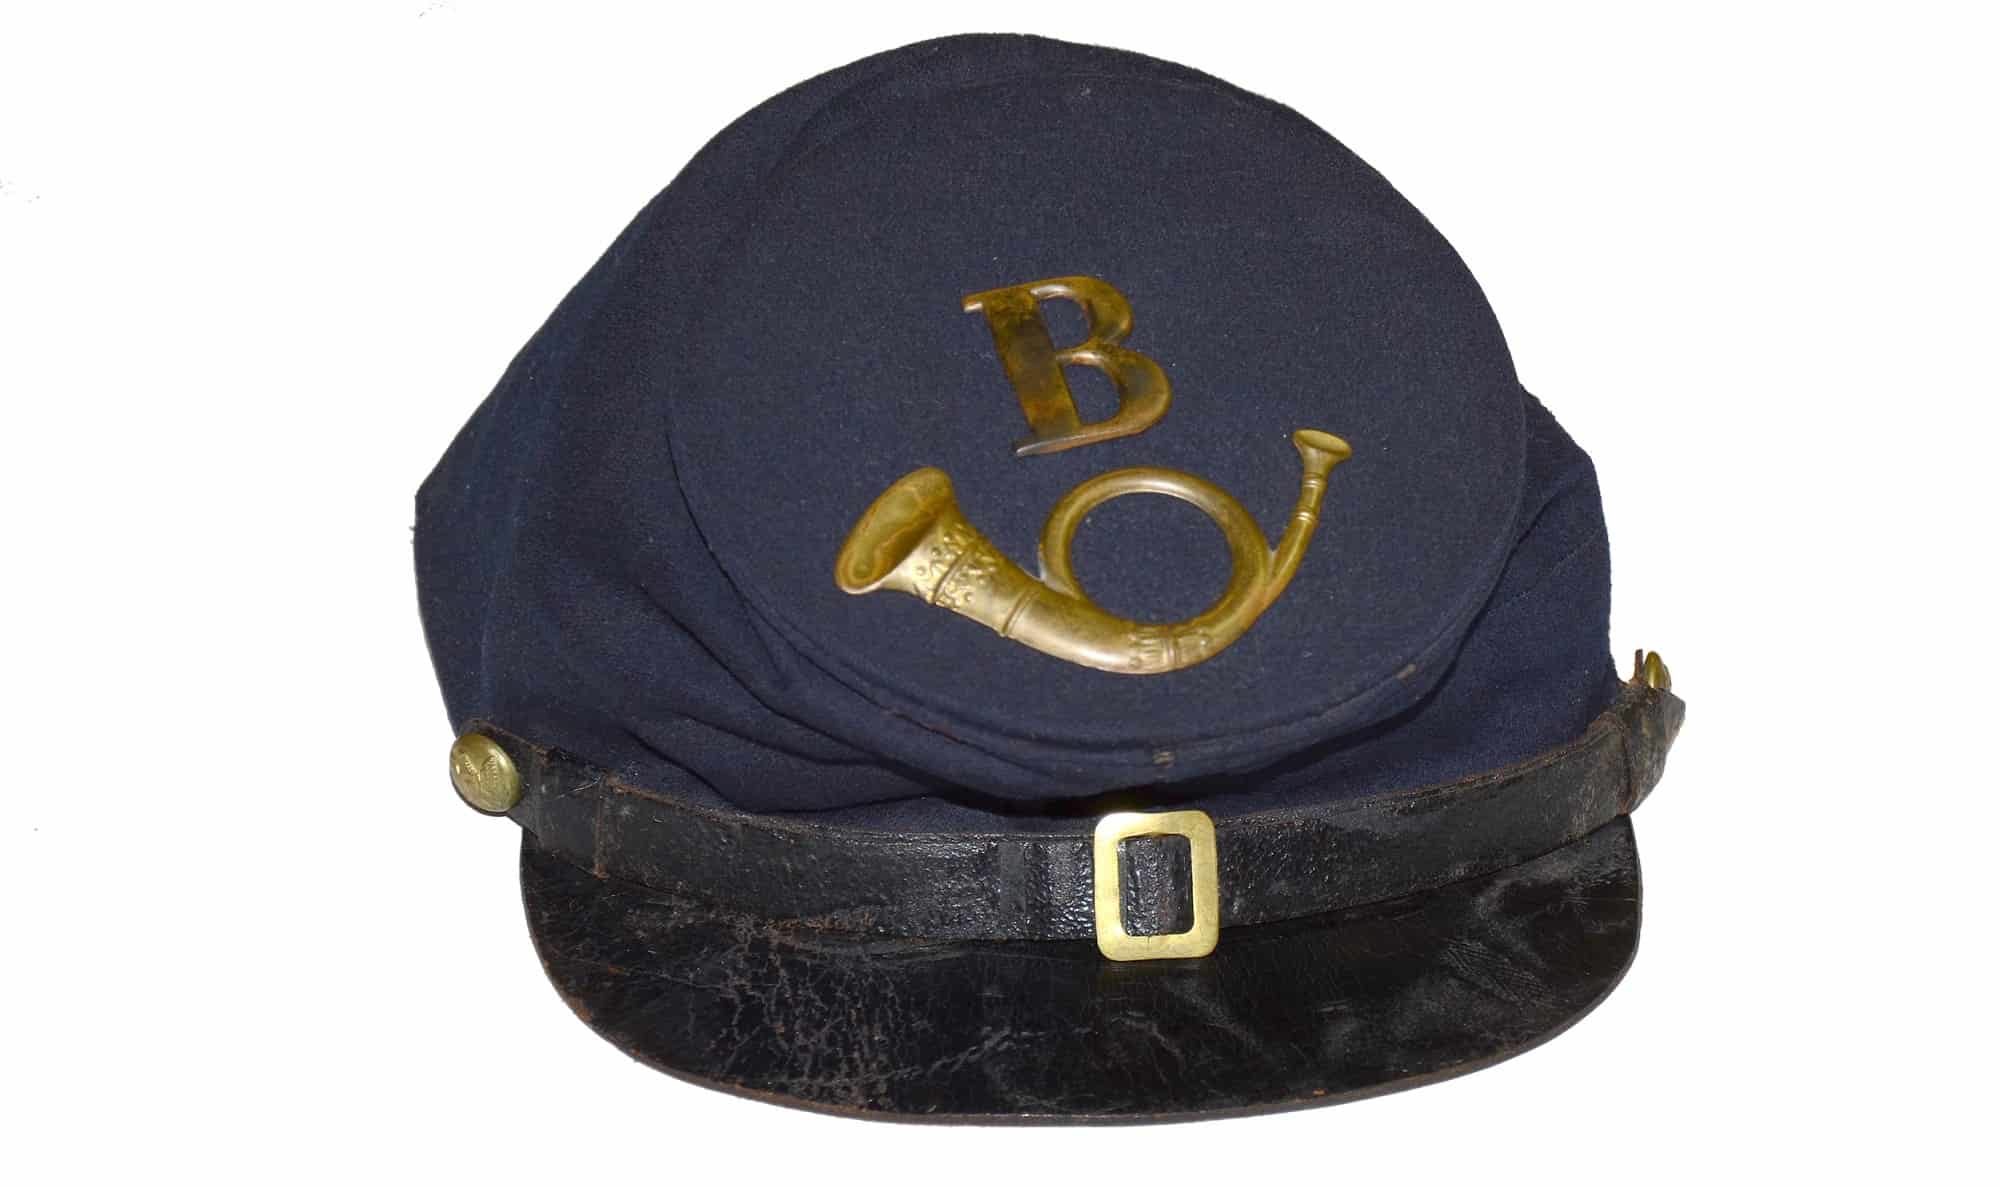 Forage caps civil war hat